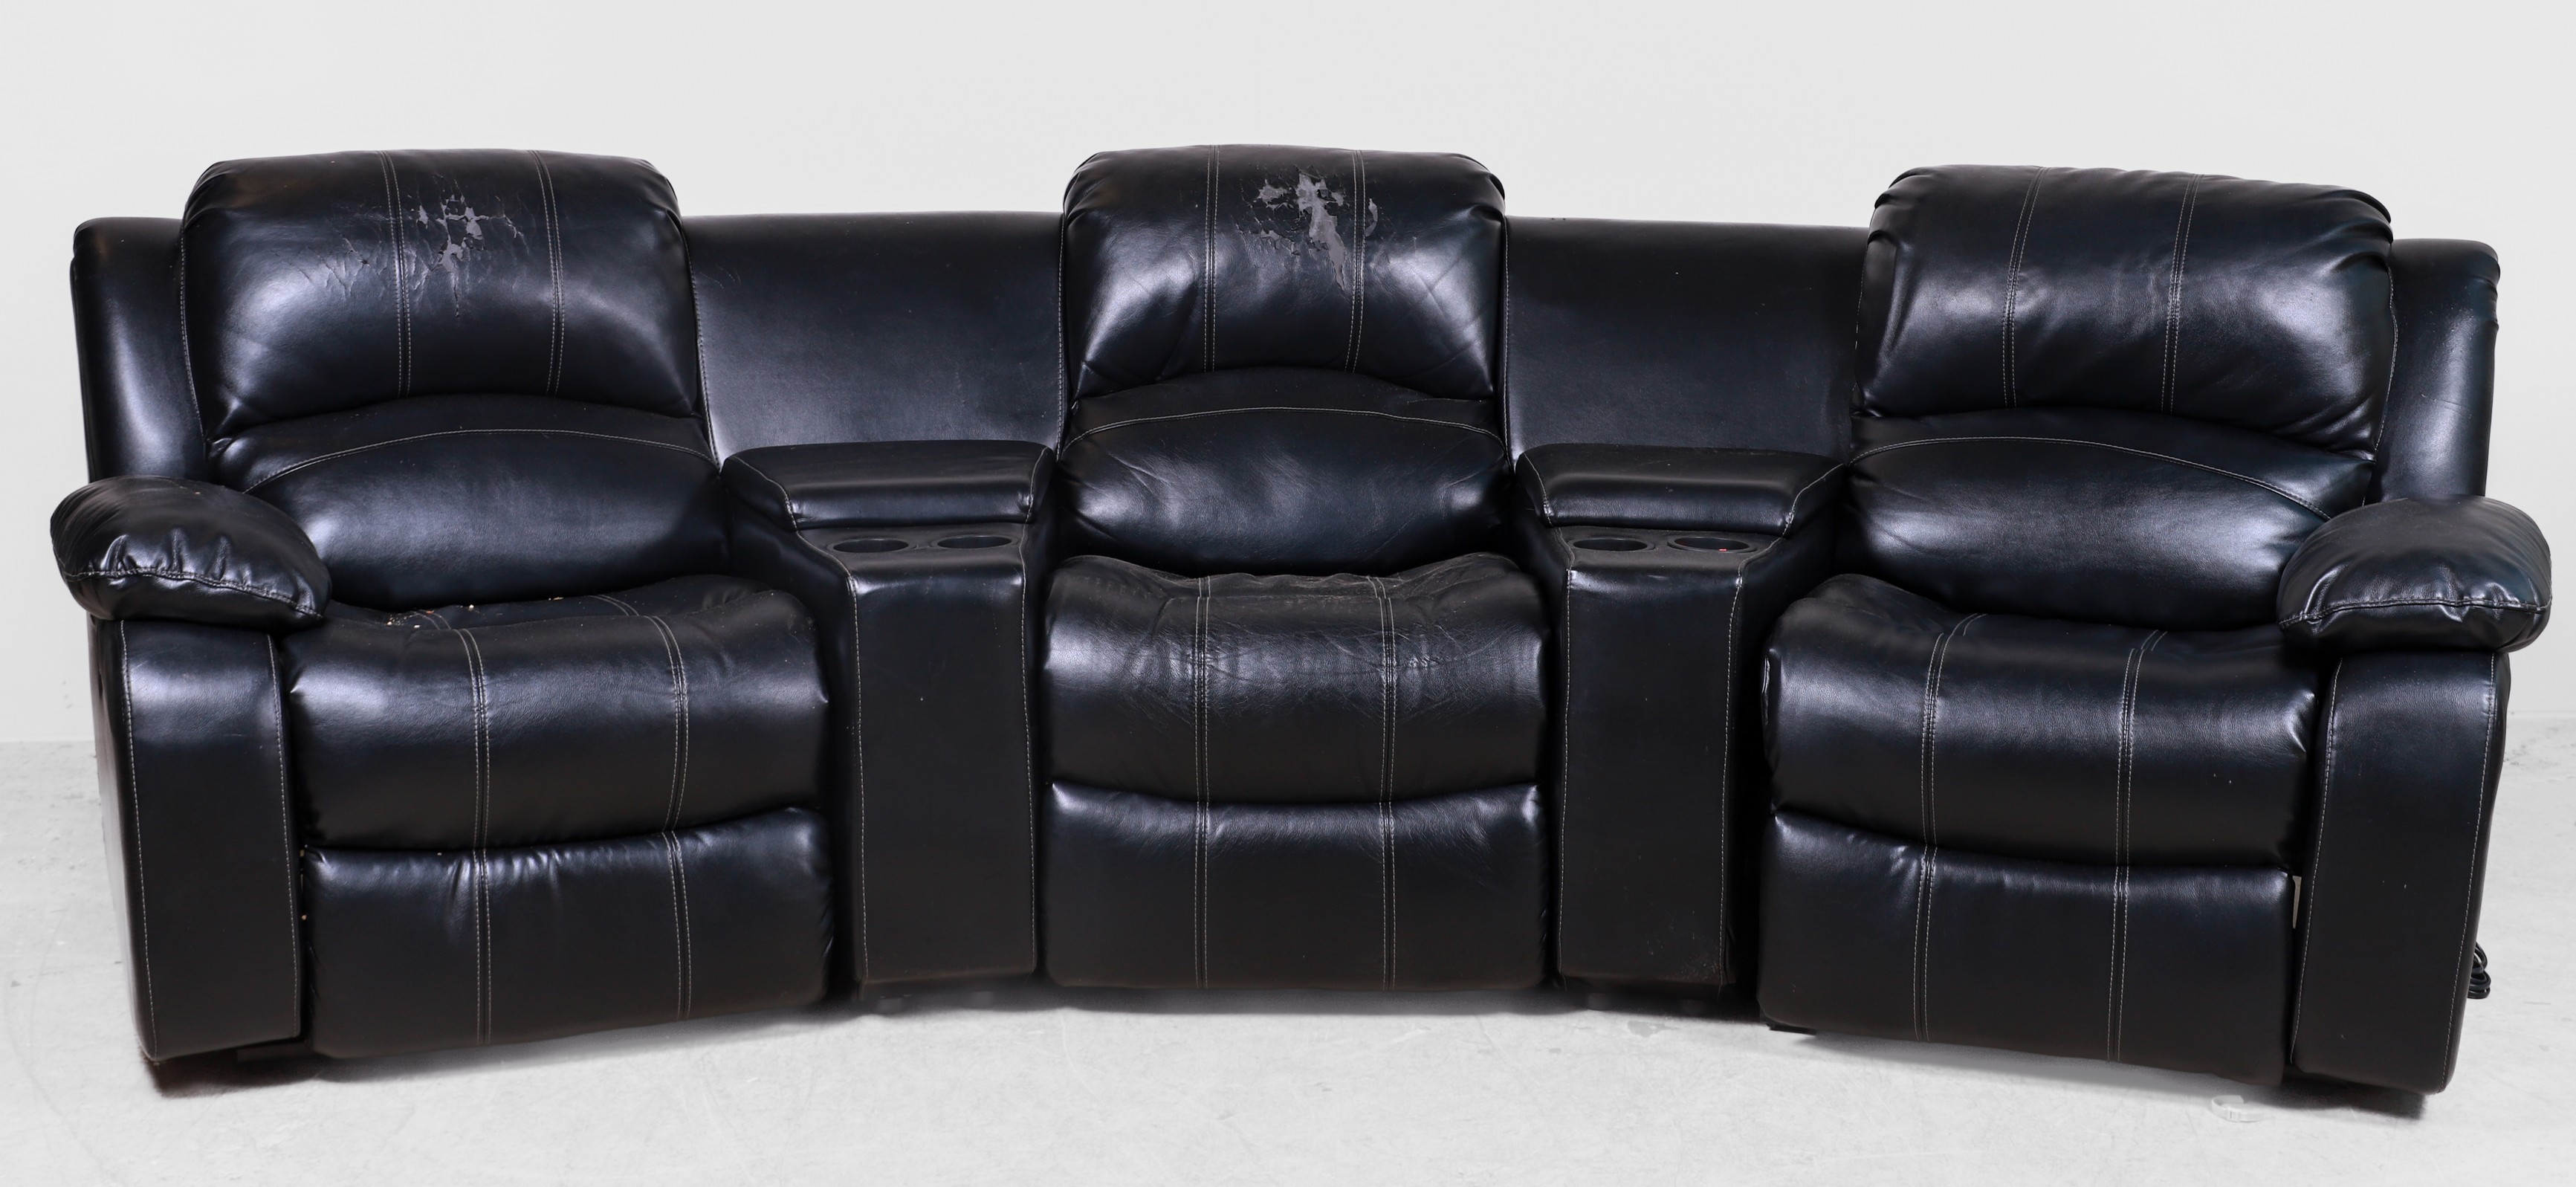  5 pc Sectional sofa black naugahyde  3b6266